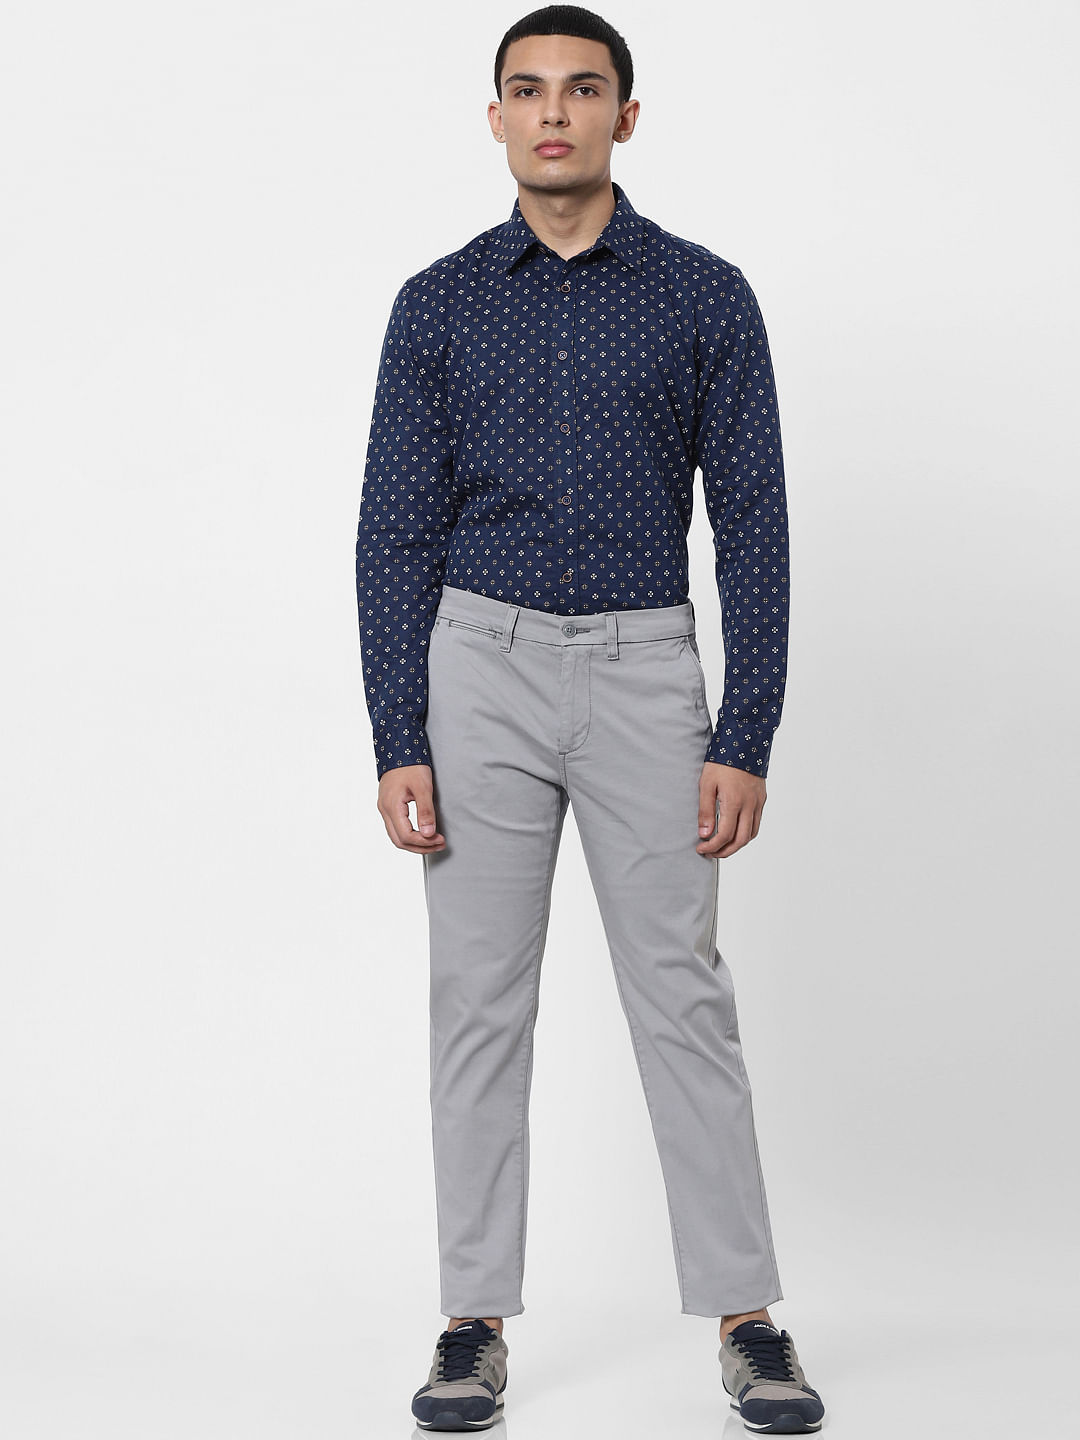 Dressing Light Blue Shirt Gray Pants Stock Photo 178300418  Shutterstock